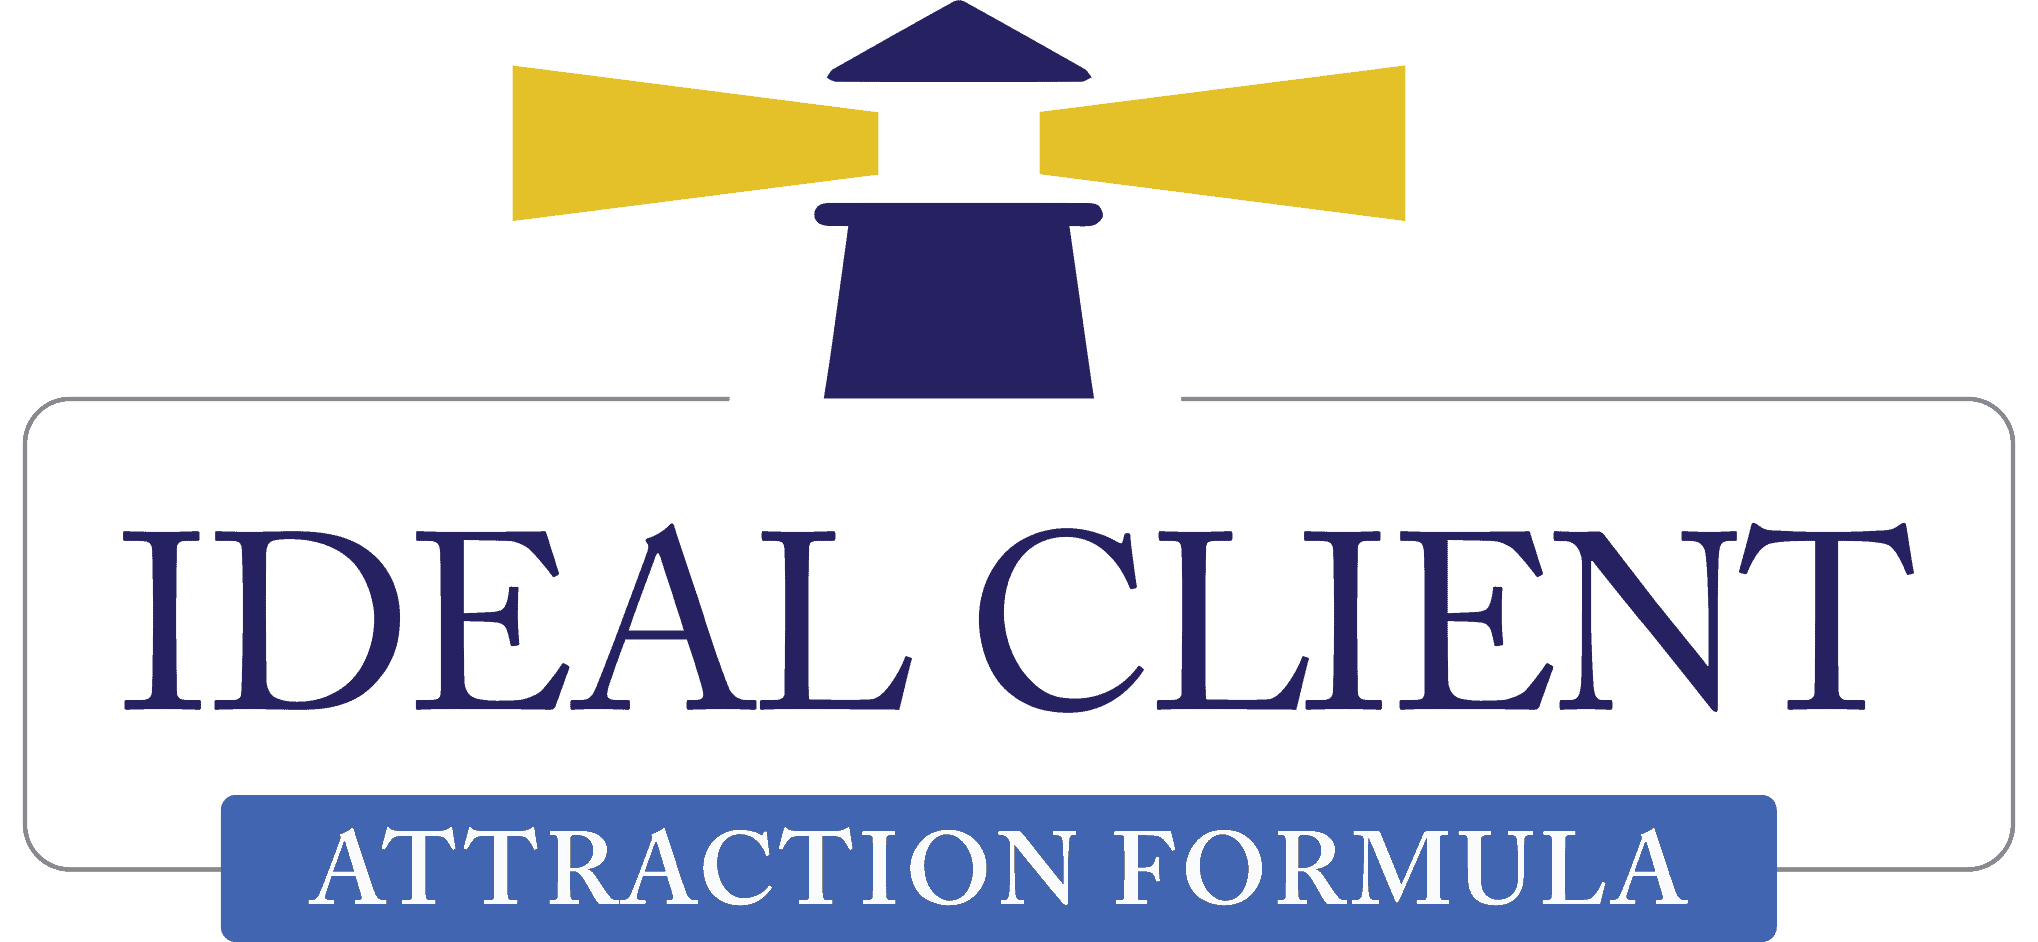 Ideal customer attraction formula